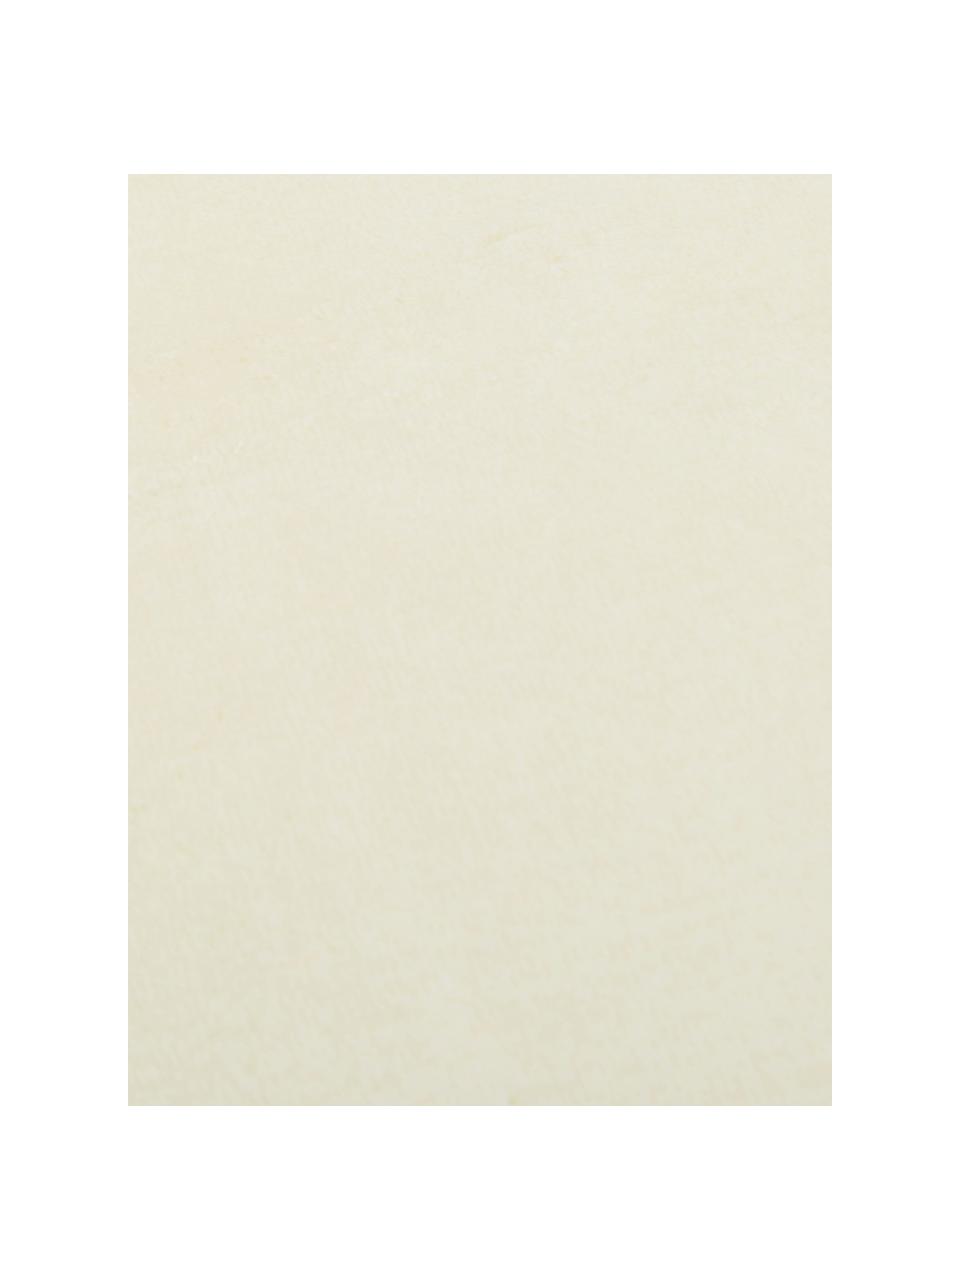 Coperta coccolosa color bianco crema Doudou, 100% poliestere, Bianco crema, Larg. 130 x Lung. 160 cm